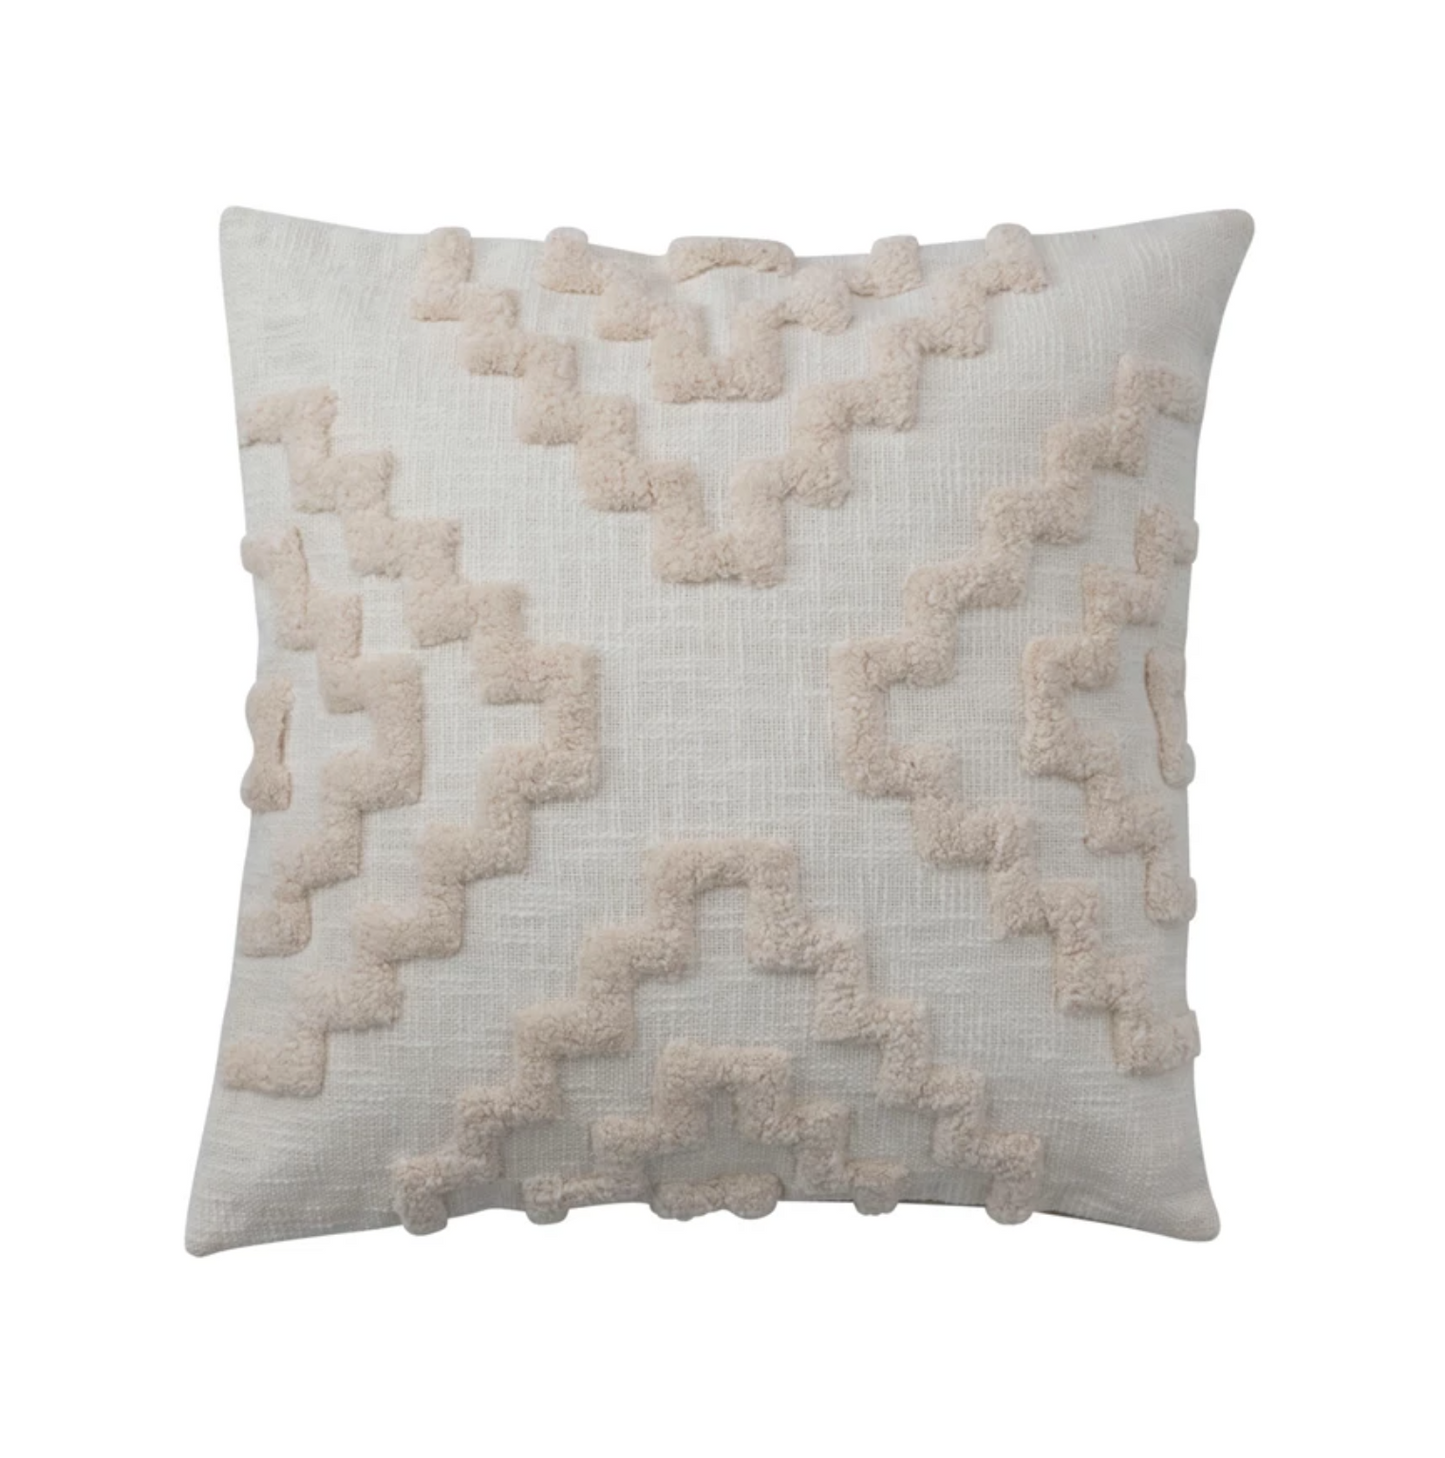 Zara Tufted Pillow